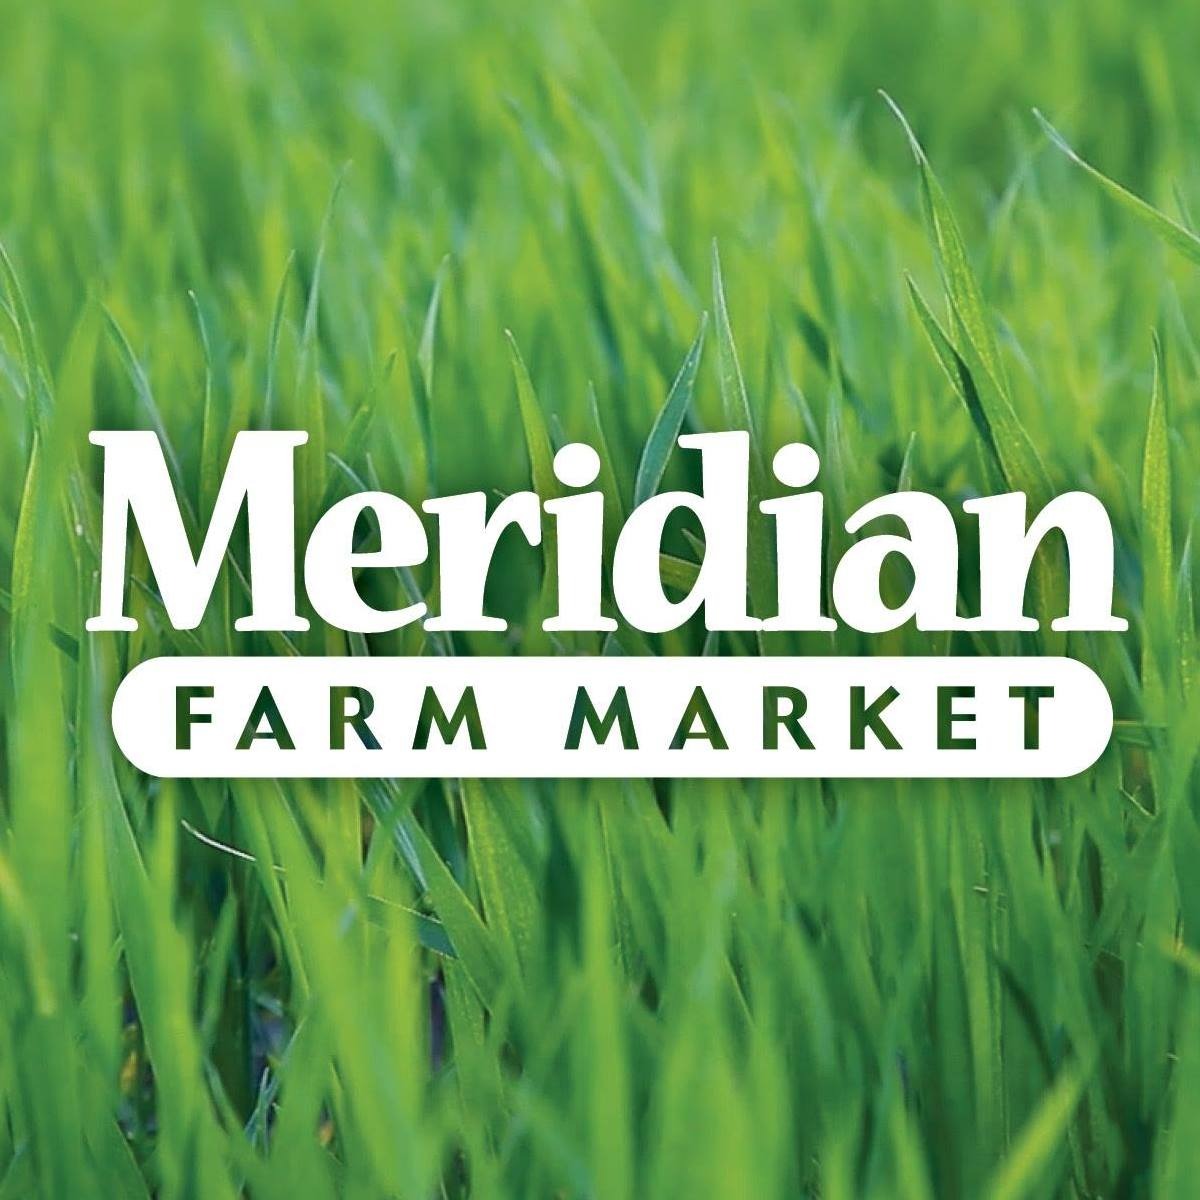 Meridian Farm Market